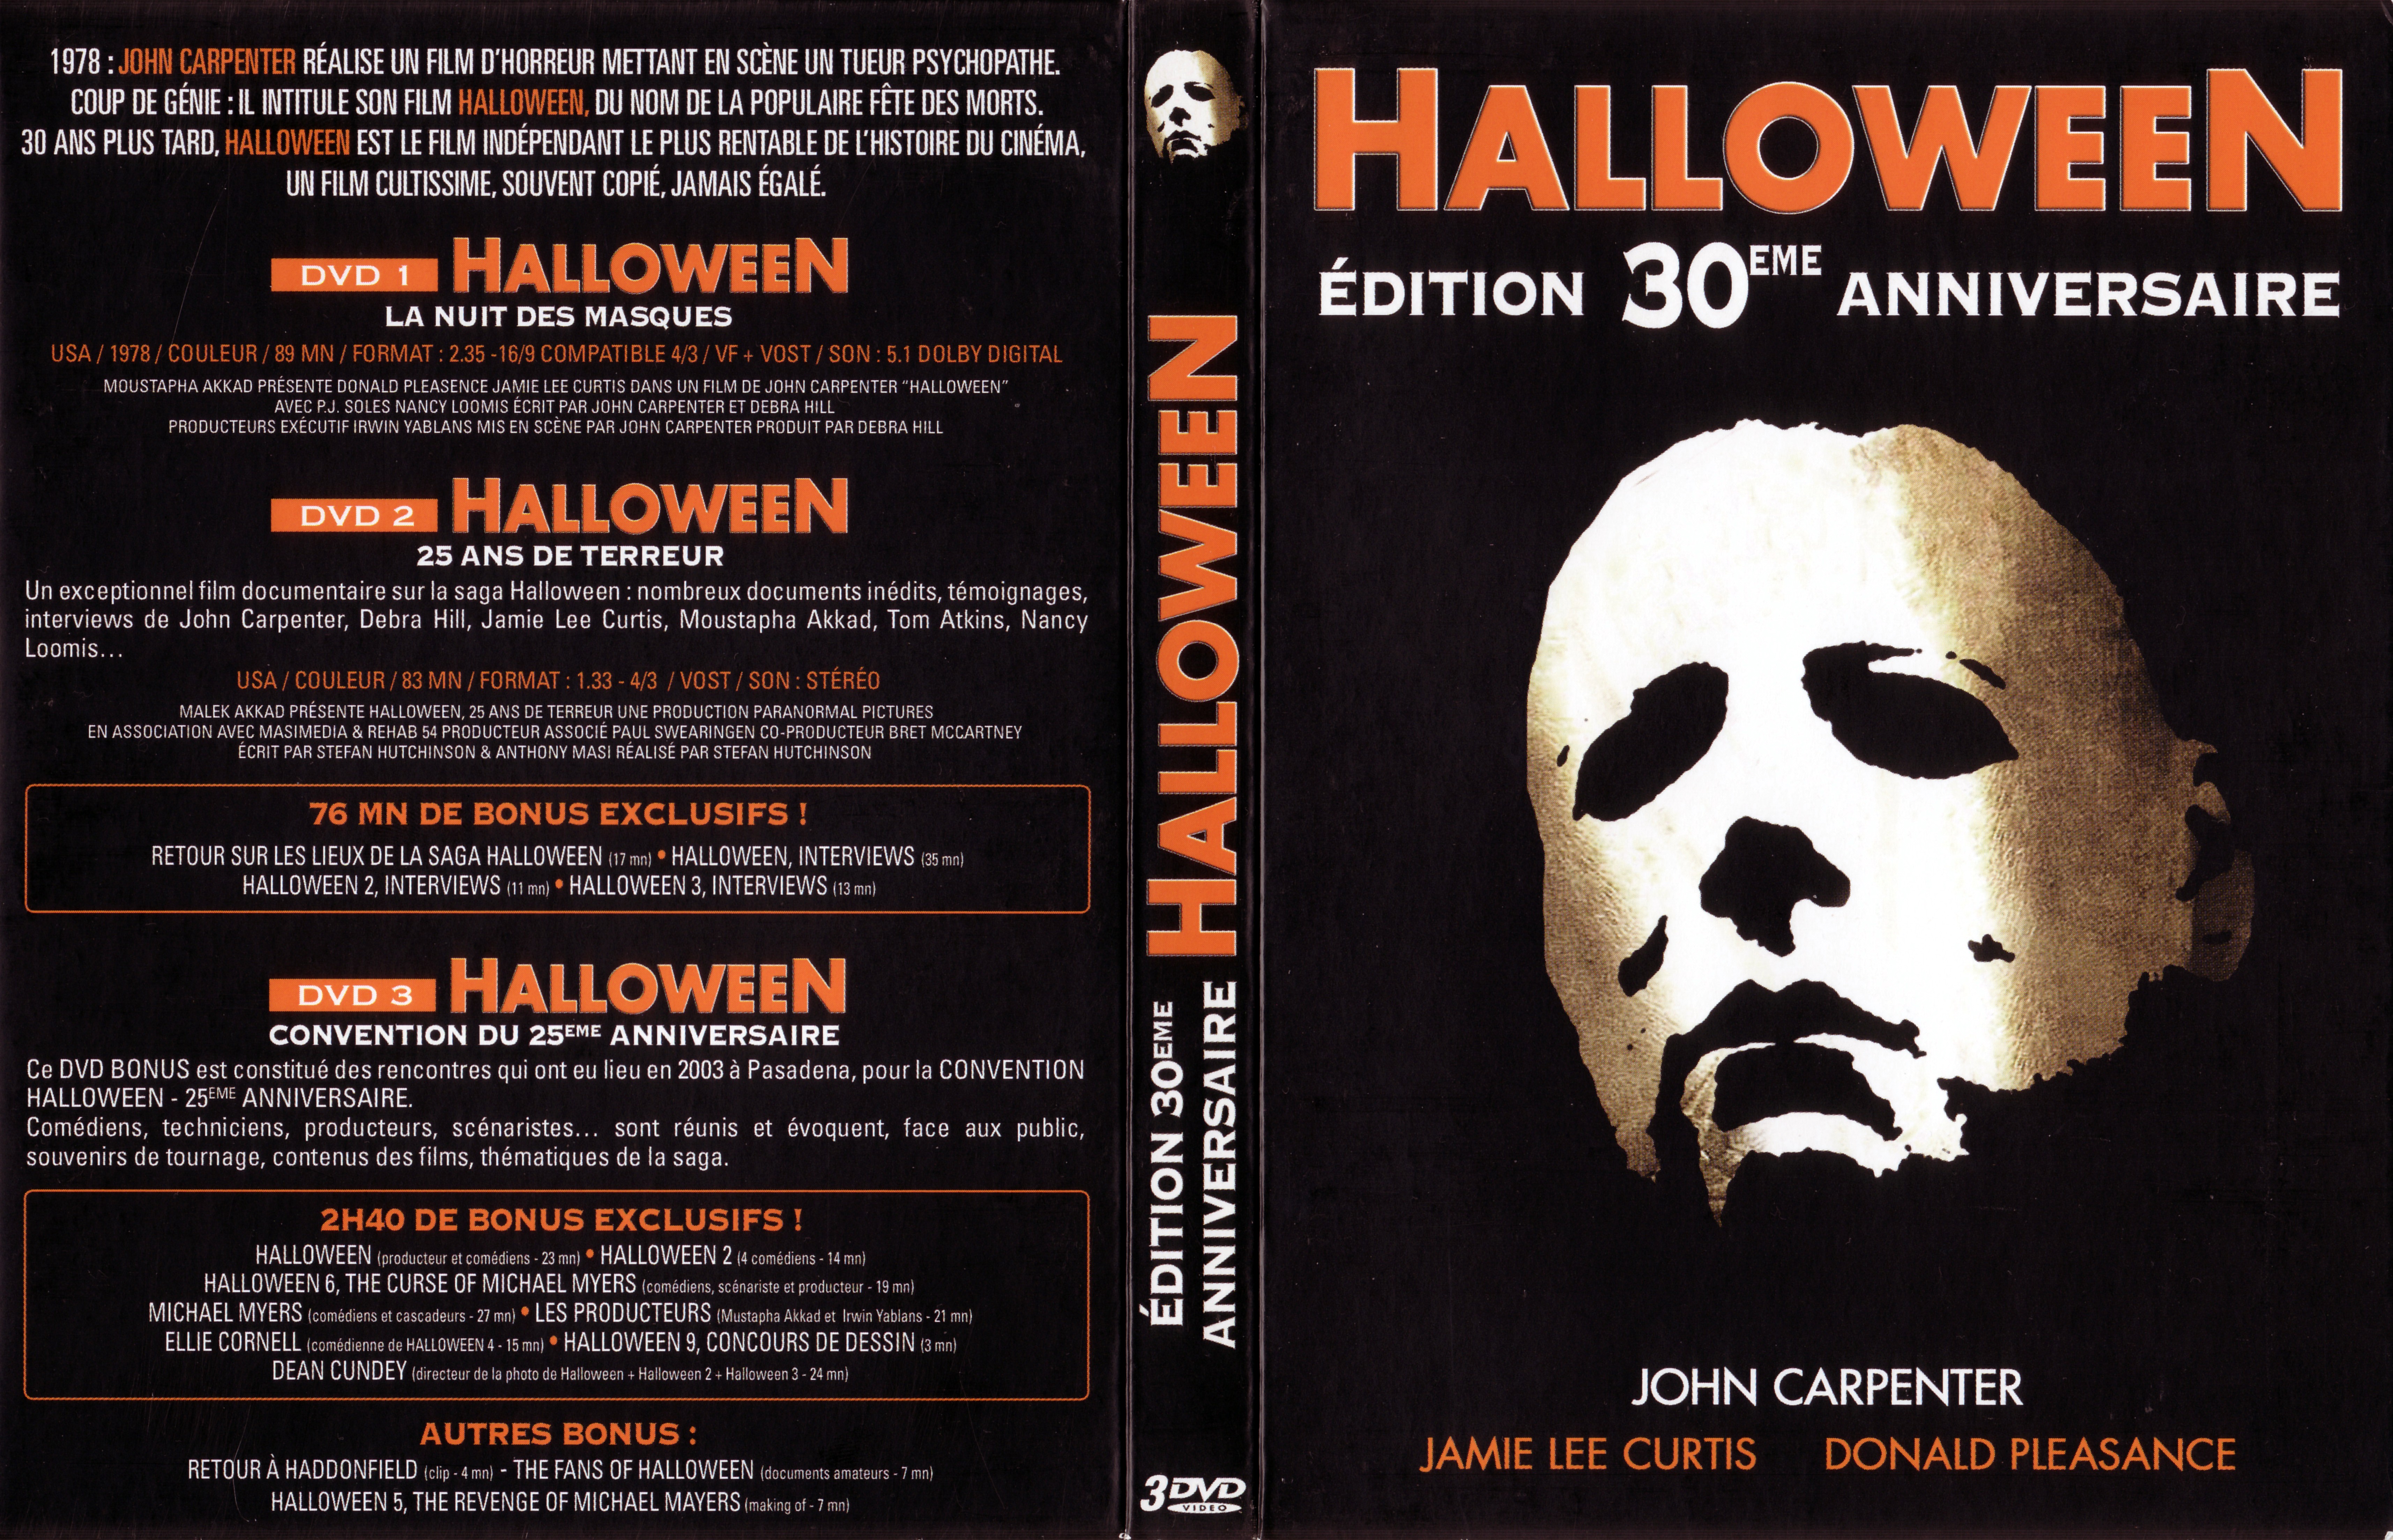 Jaquette DVD Halloween v5